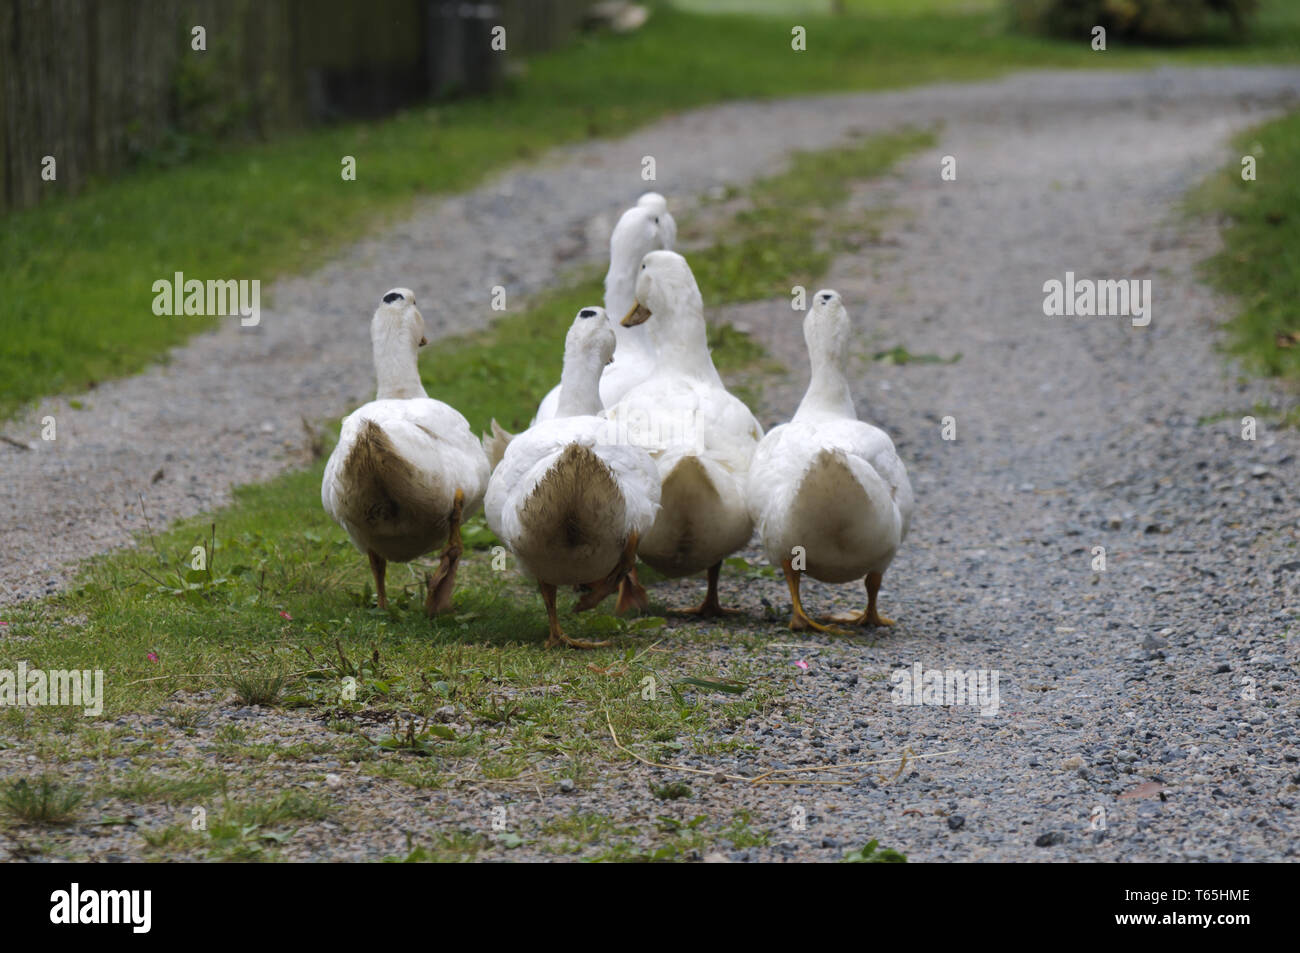 Group of white ducks, ecological livestock on a farm. Stock Photo